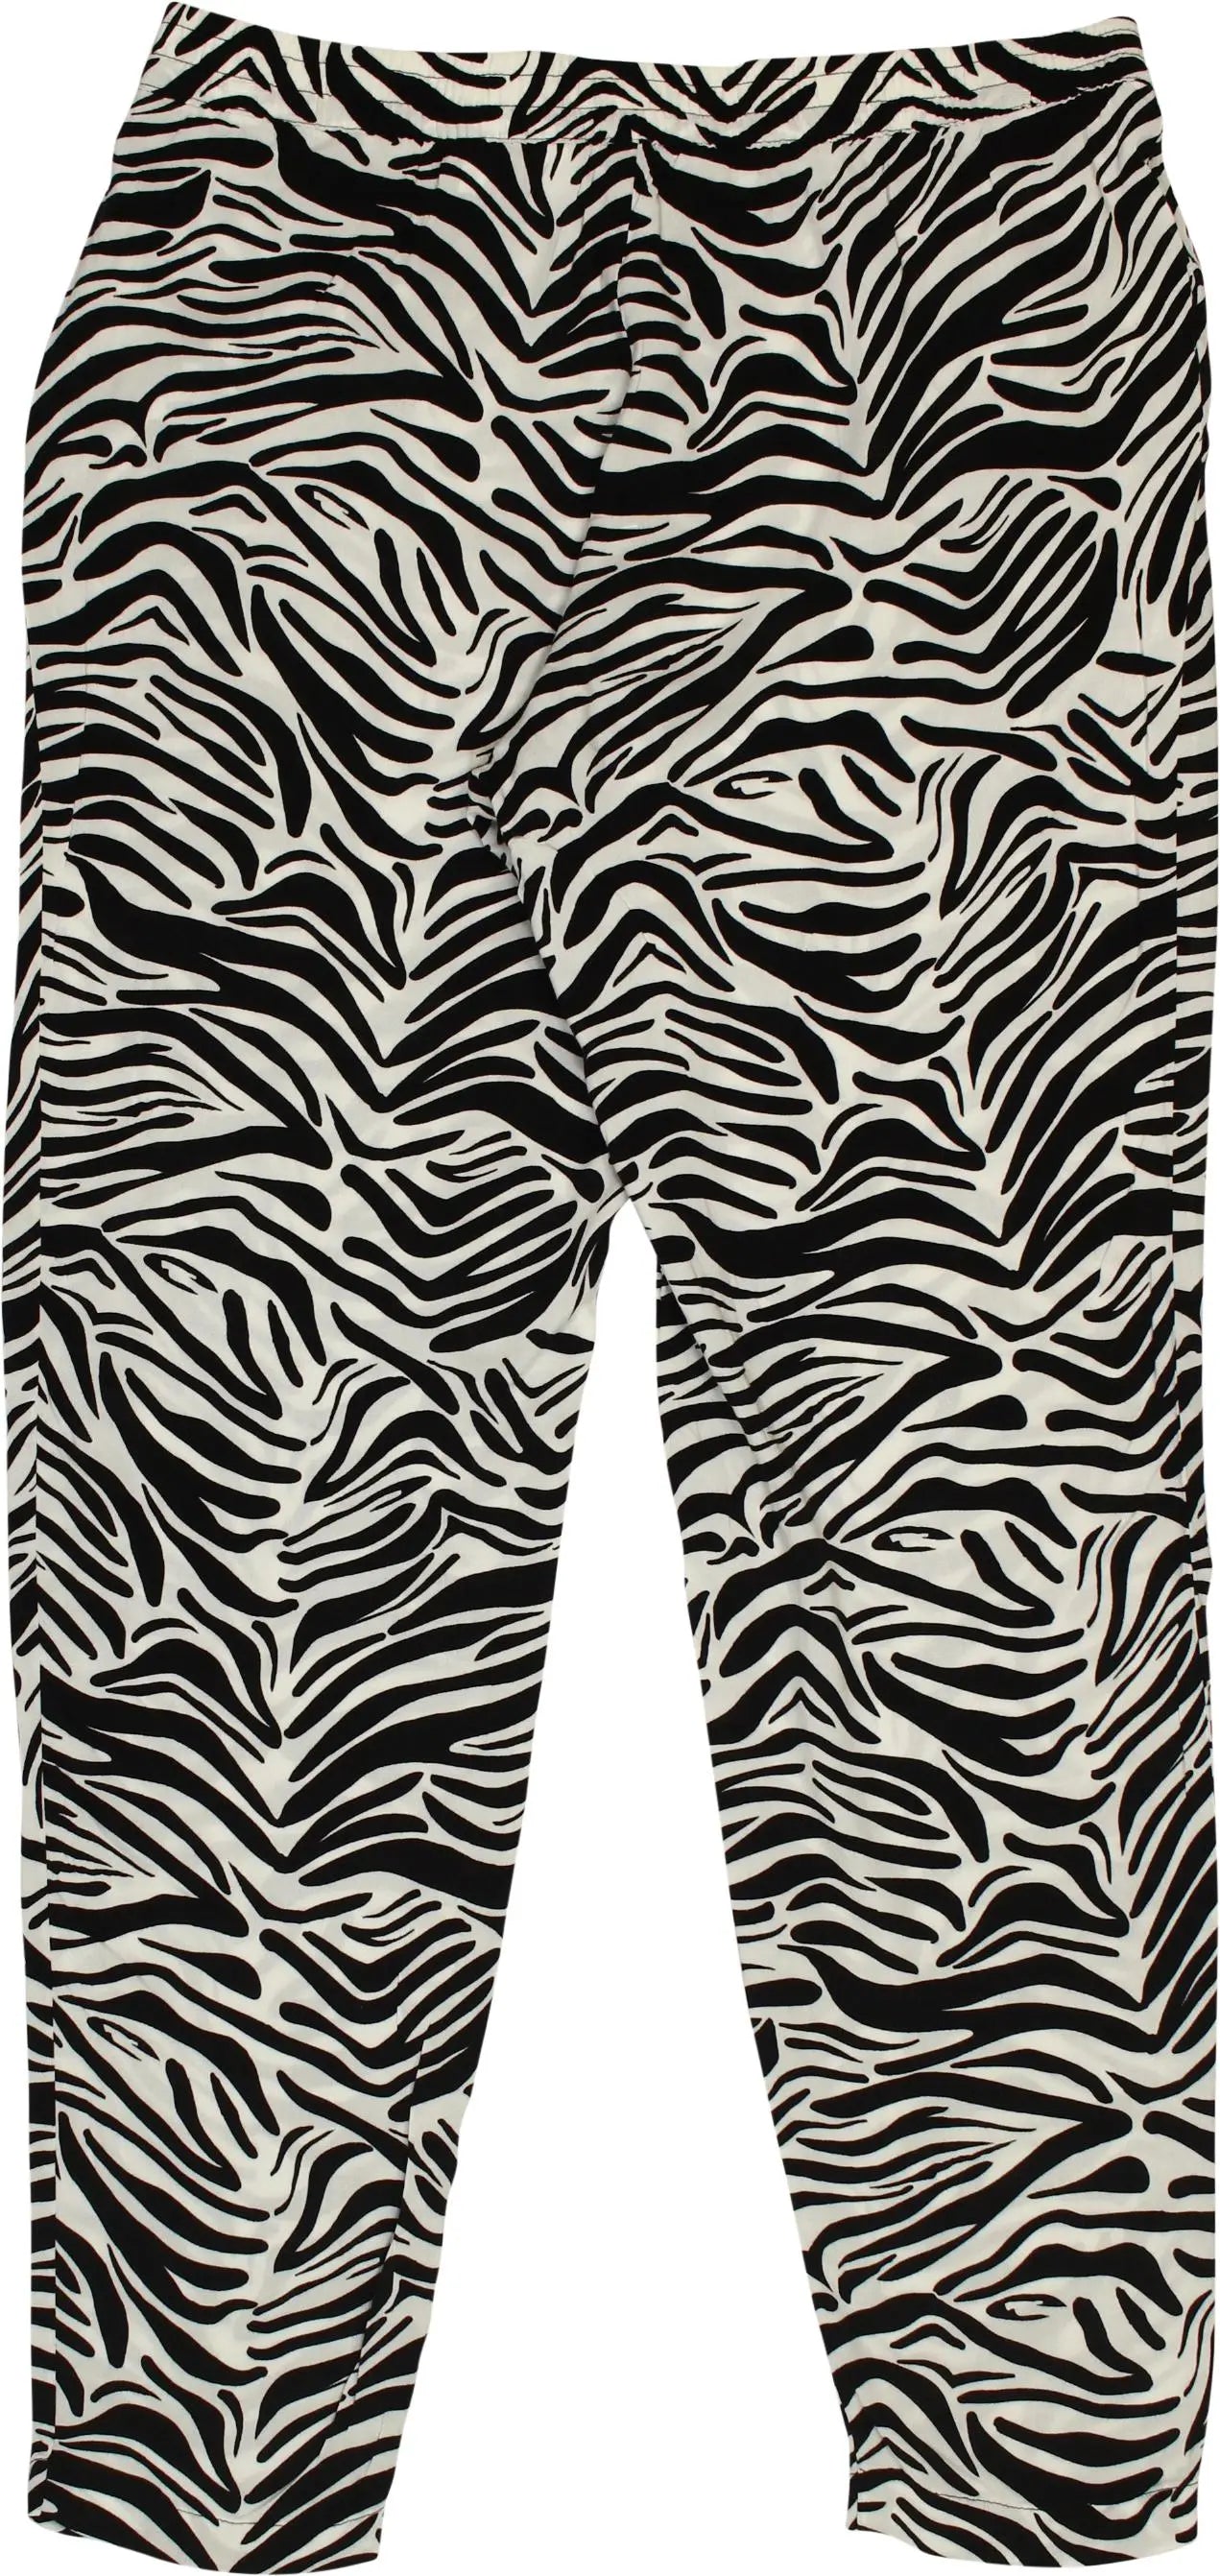 H&M - Zebra Pants- ThriftTale.com - Vintage and second handclothing